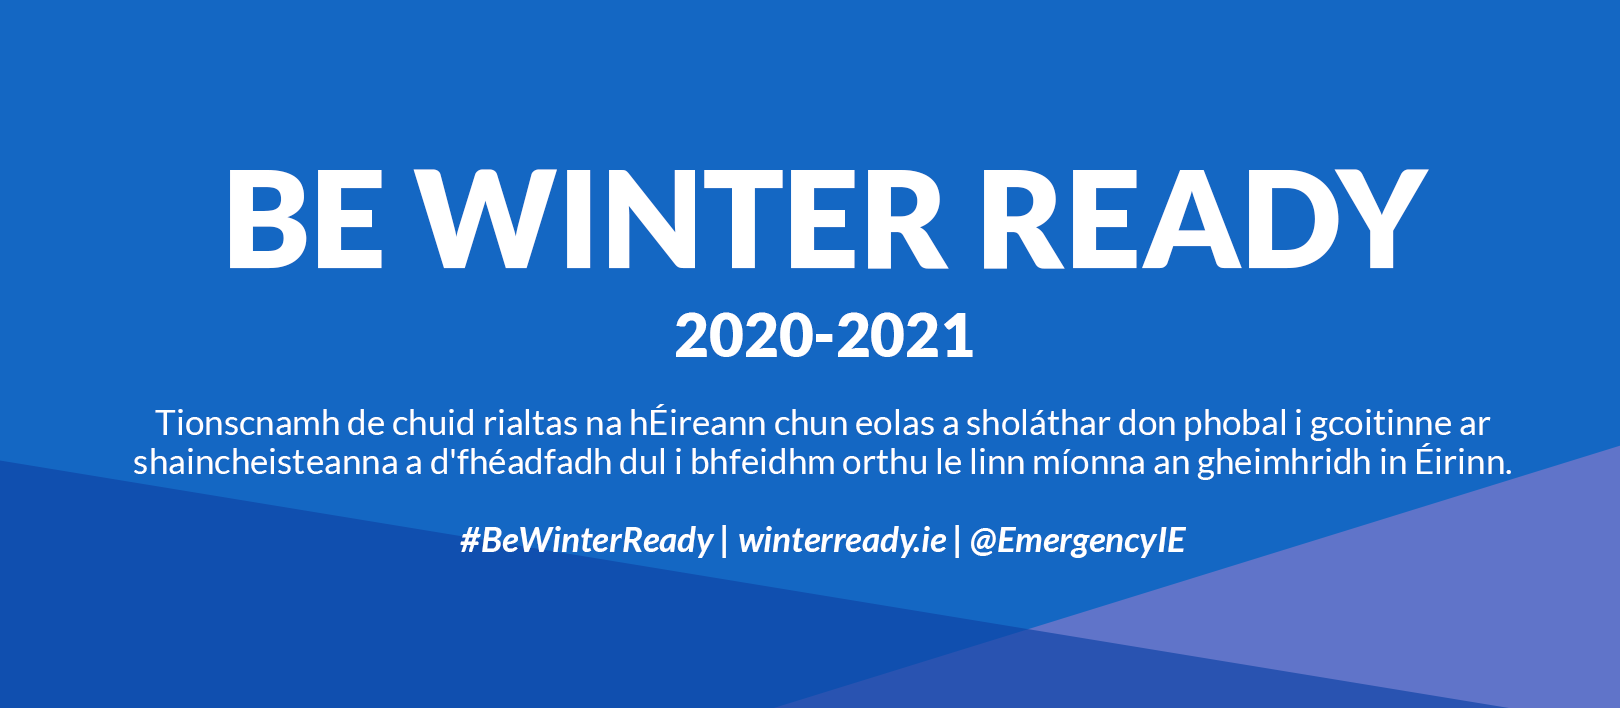 Winter ready 2020 Irish